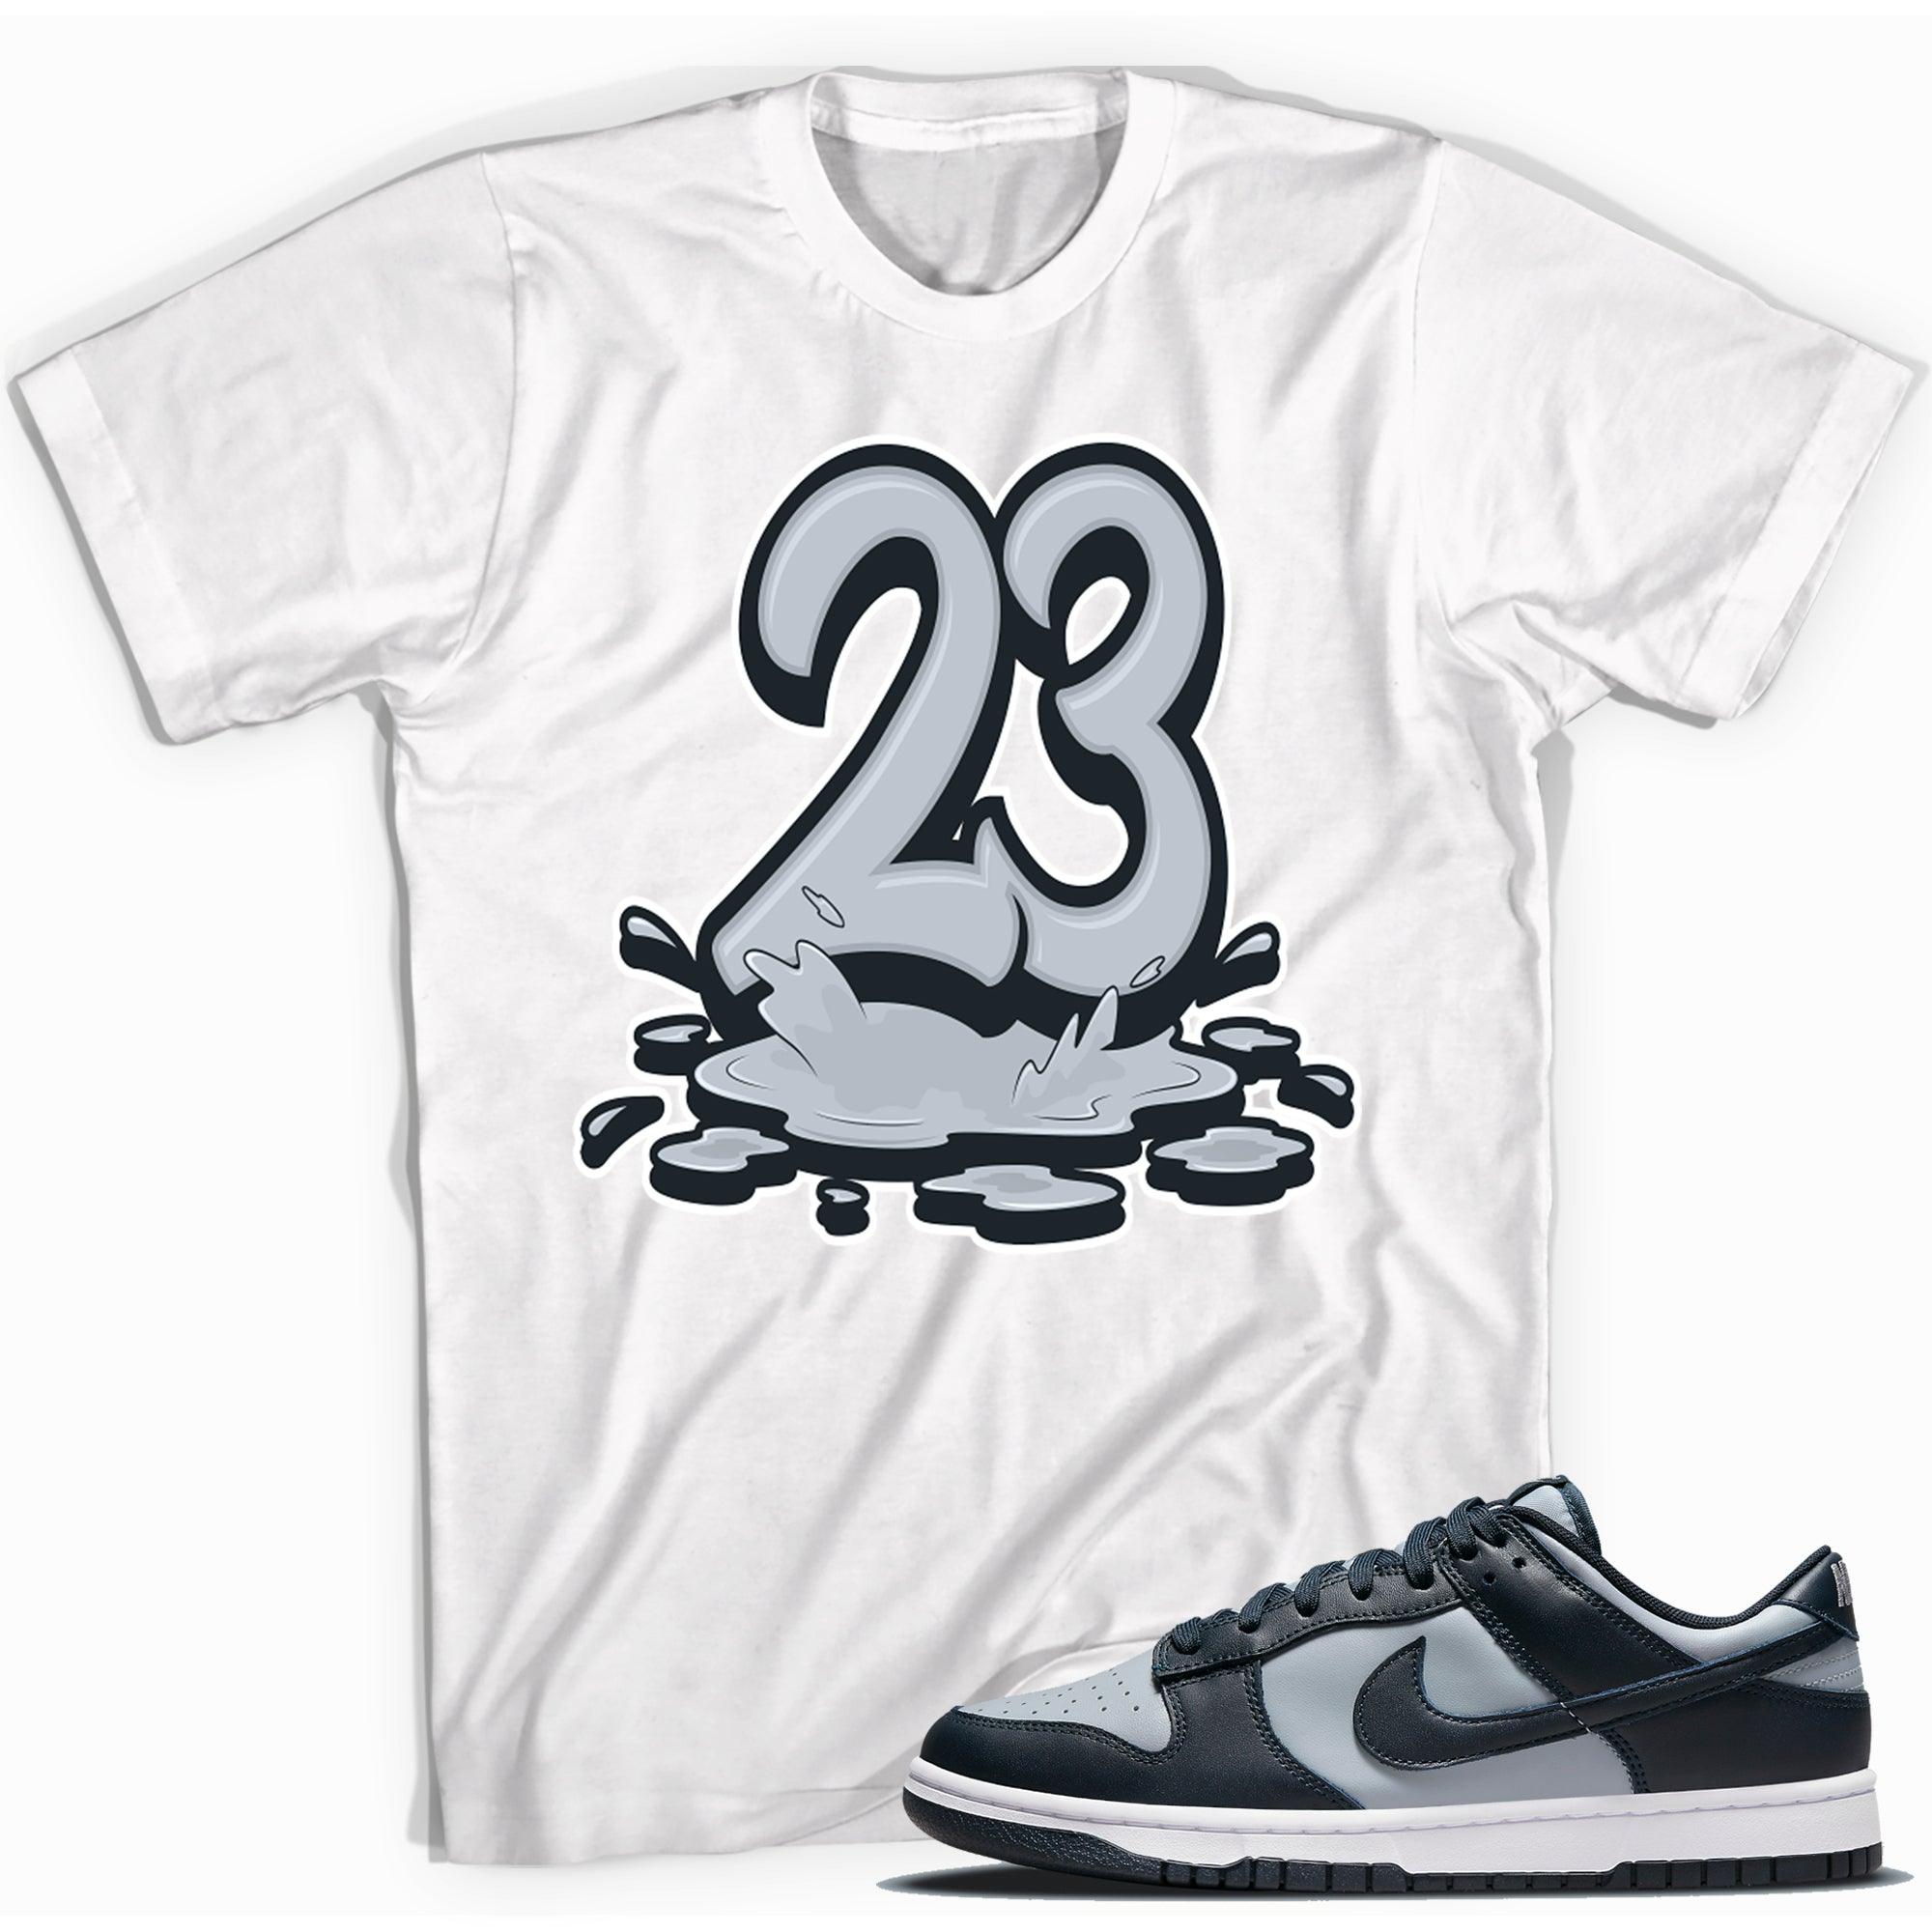 Number 23 Melting Shirt Nike Dunk Low Georgetown photo